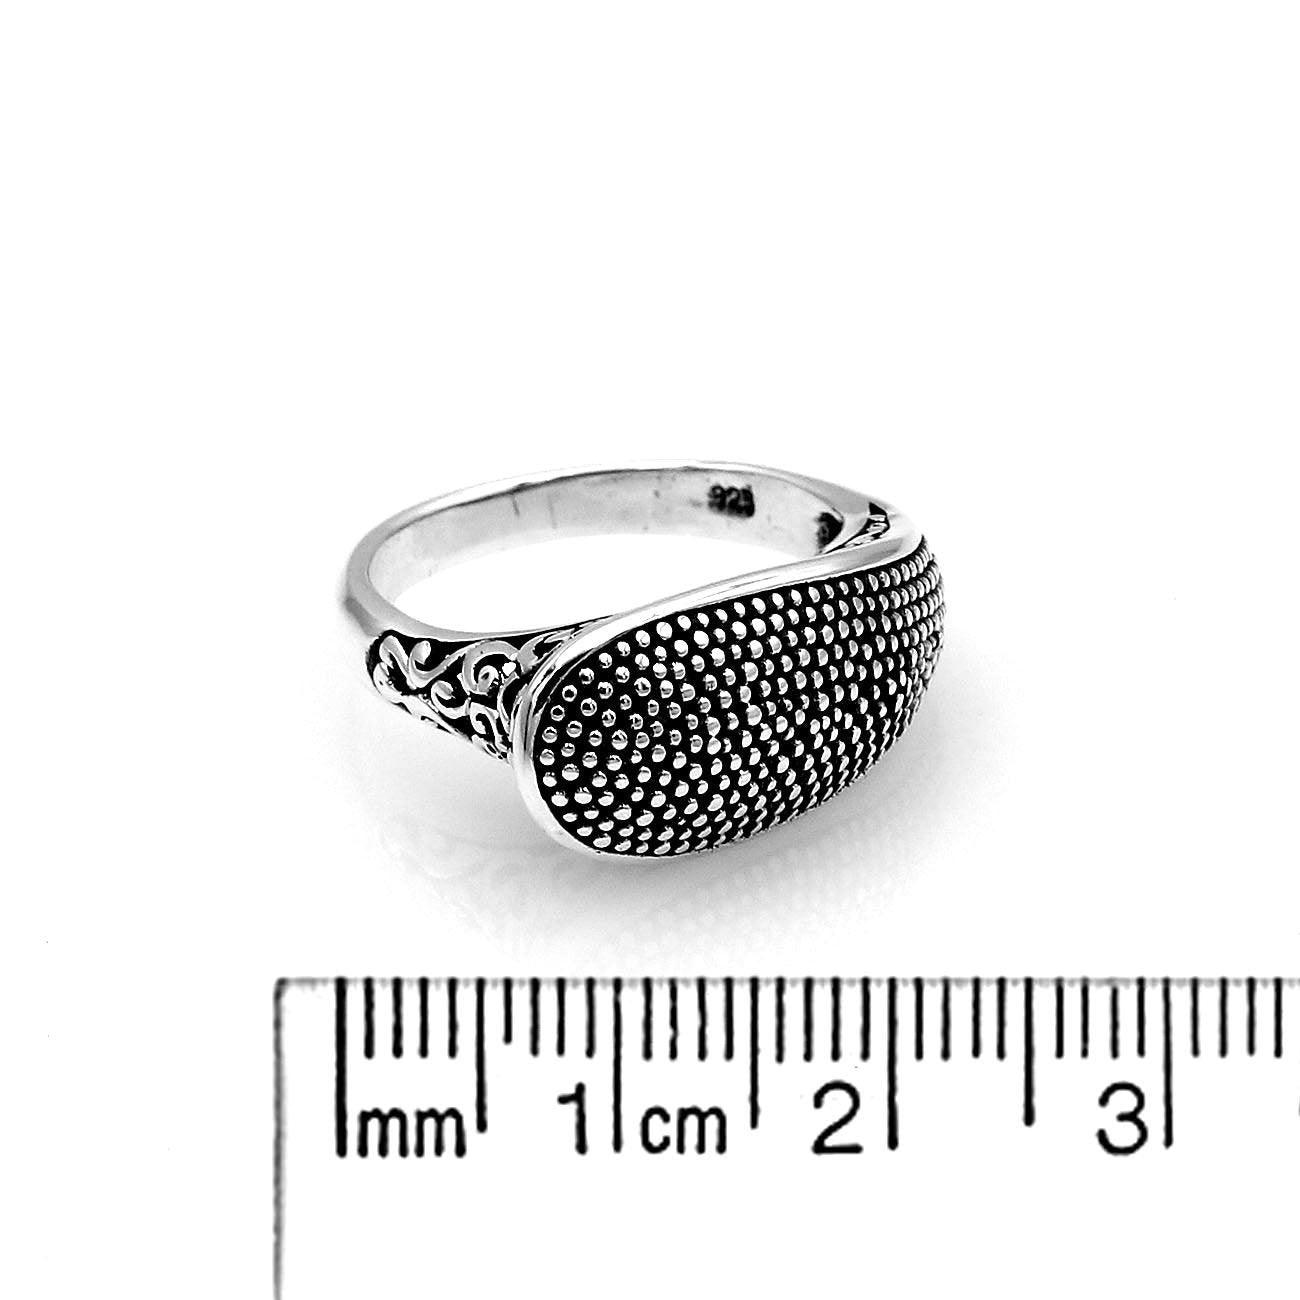 Vintage Designer Handmade BALI BAND Ring in 925 Sterling Silver - Size L , M , N , O , P , Q - Inspiring Jewellery